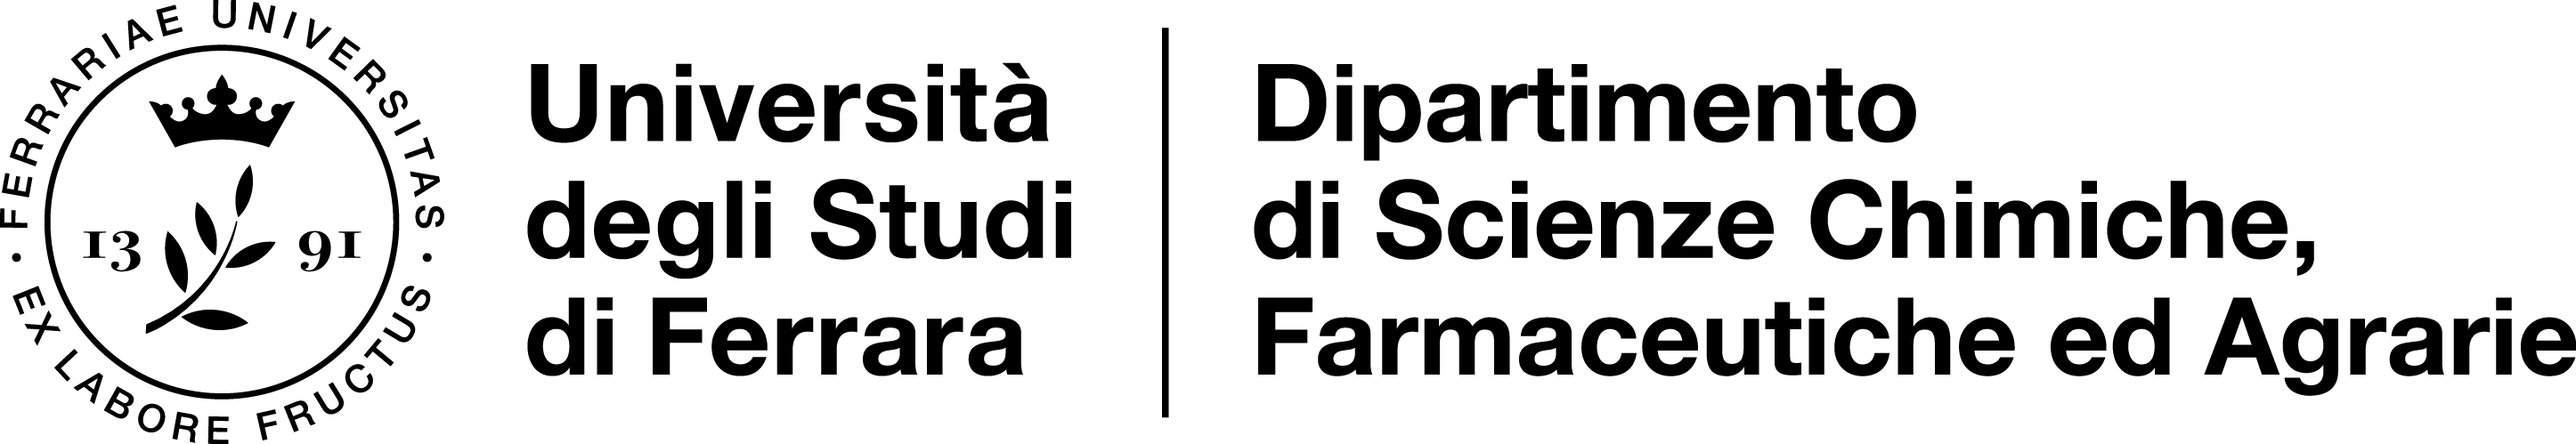 14 - Logo Docpas